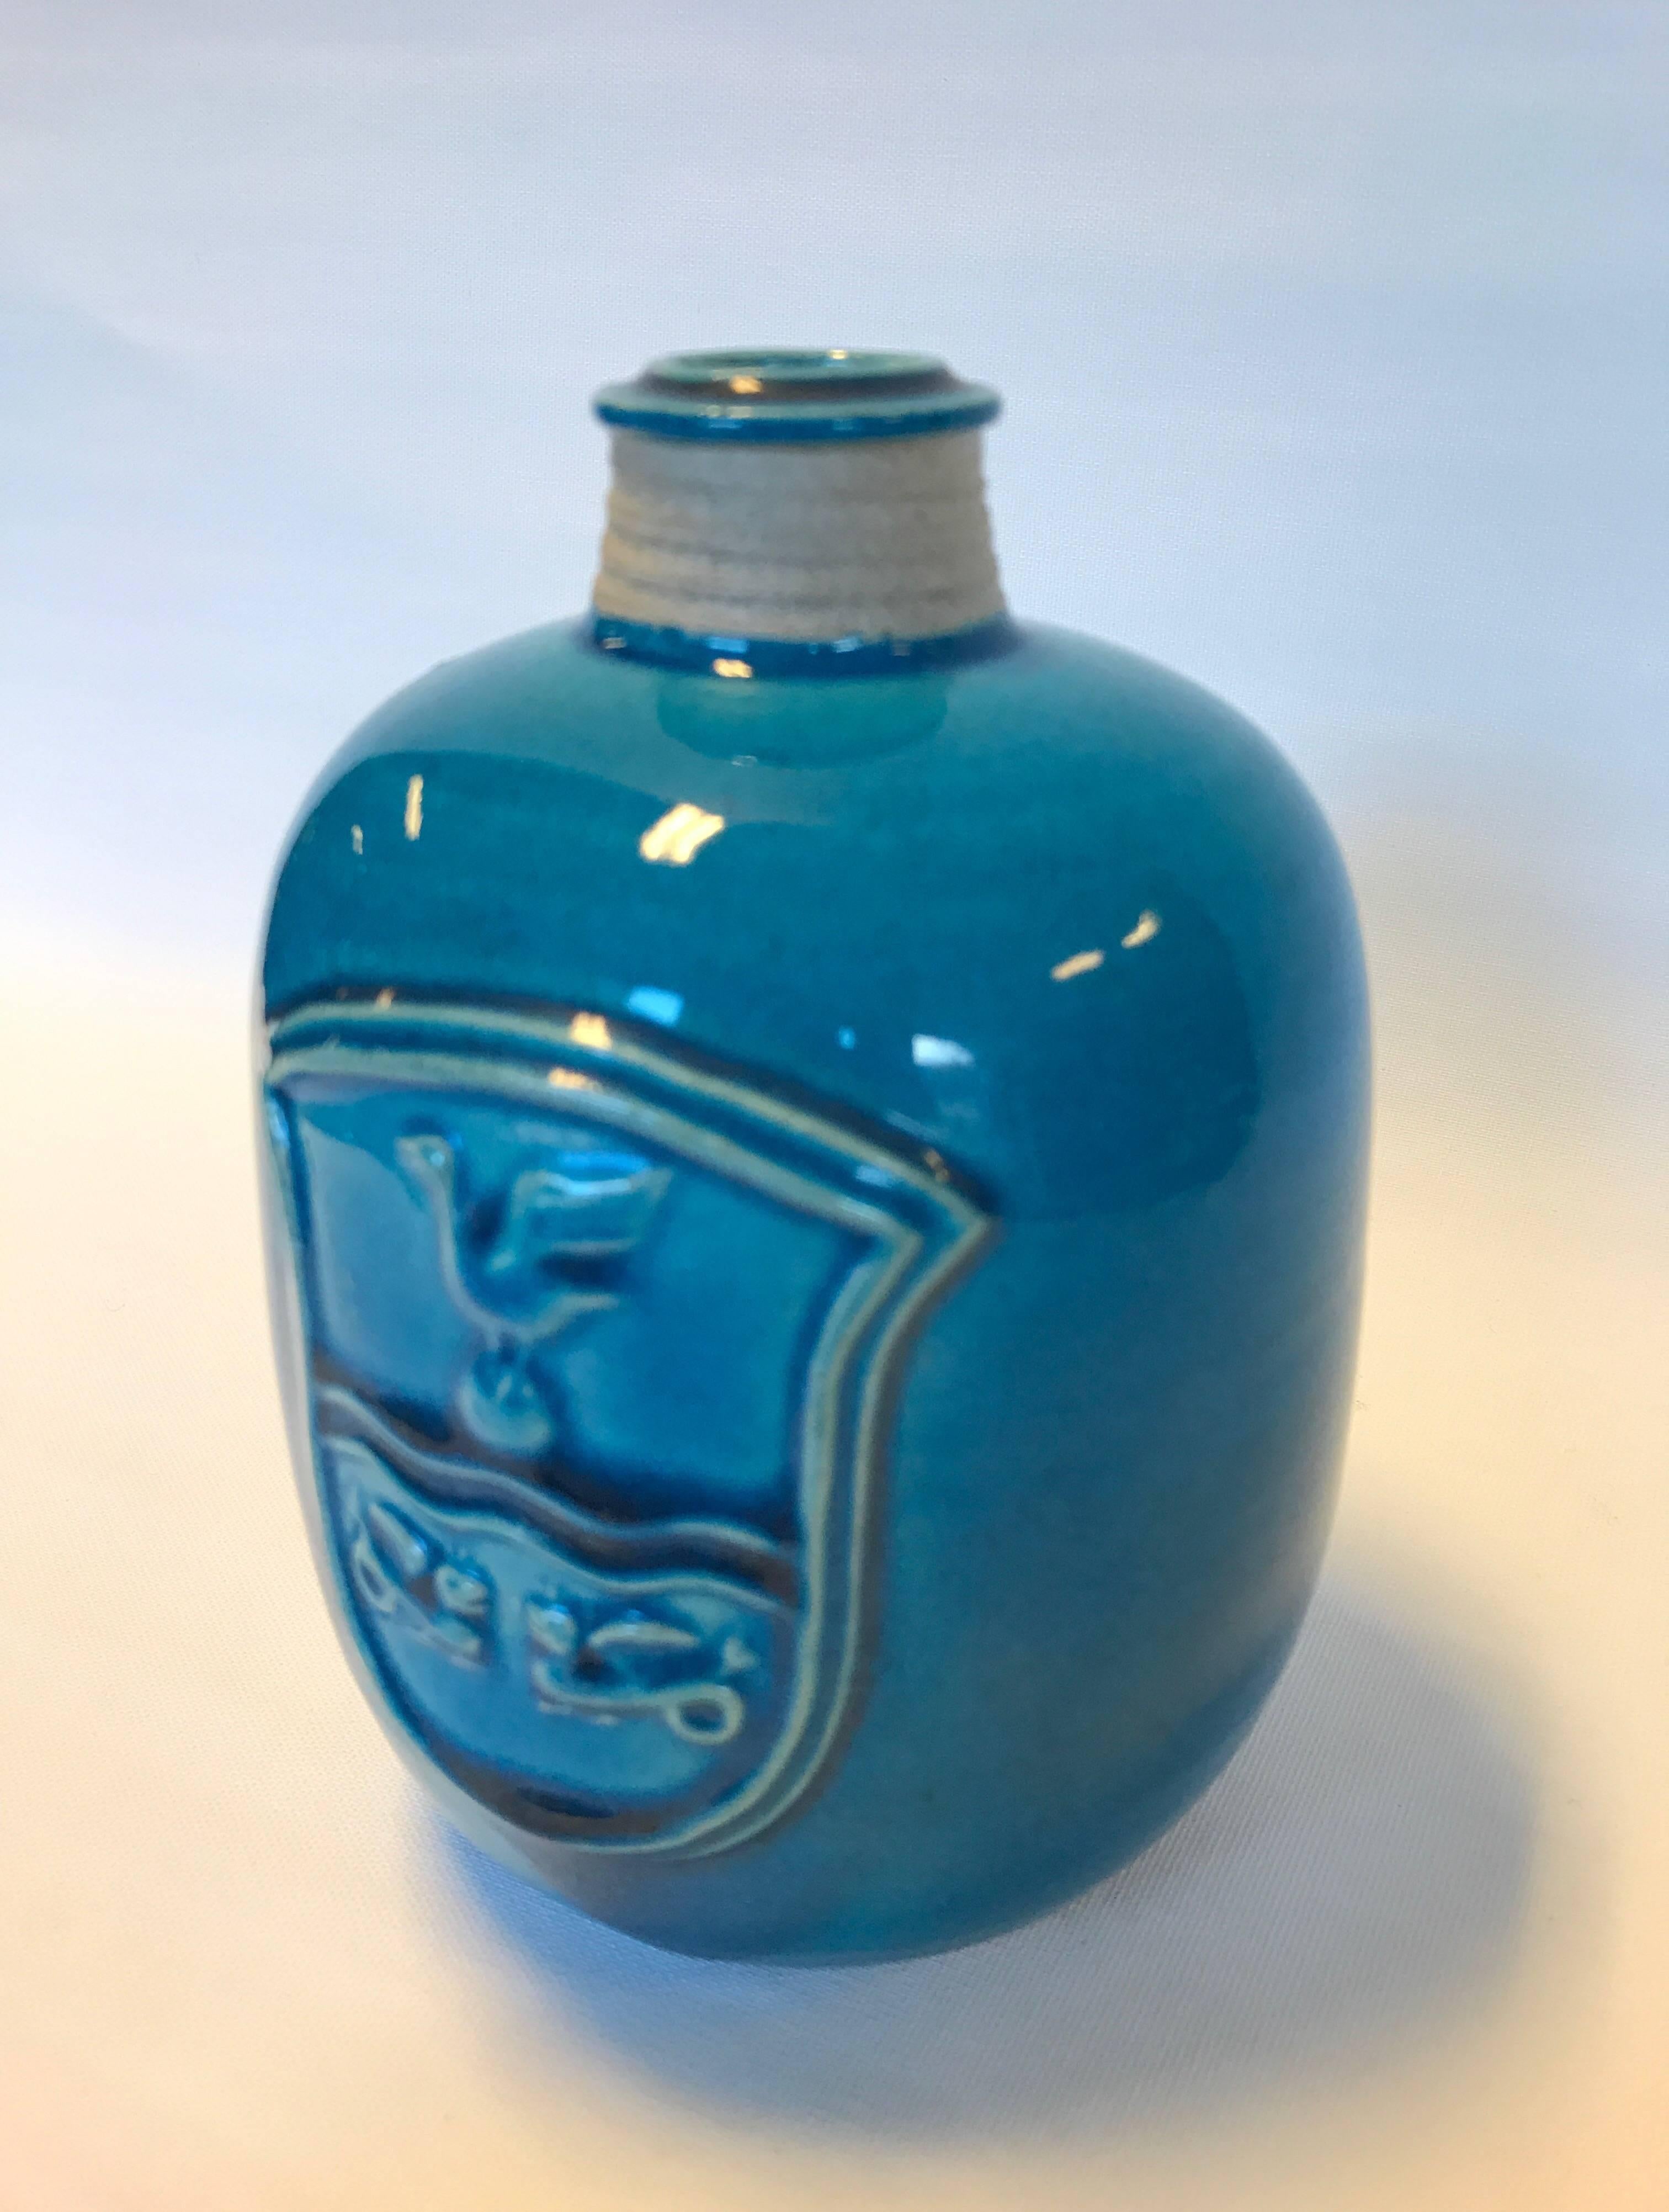 Small Nils Kähler stoneware vase in turquoise glaze, 1960s, Denmark. Measure: Diameter 11 cm, height 15 cm. In very good condition.